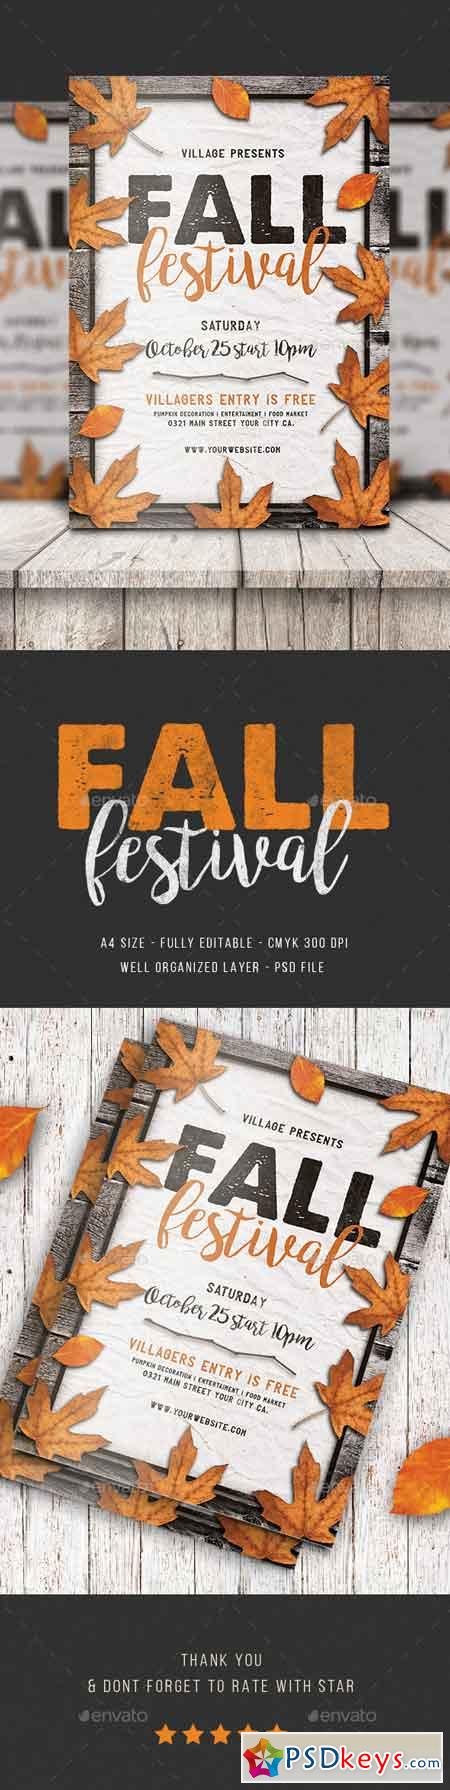 Fall Festival Flyer 17652574